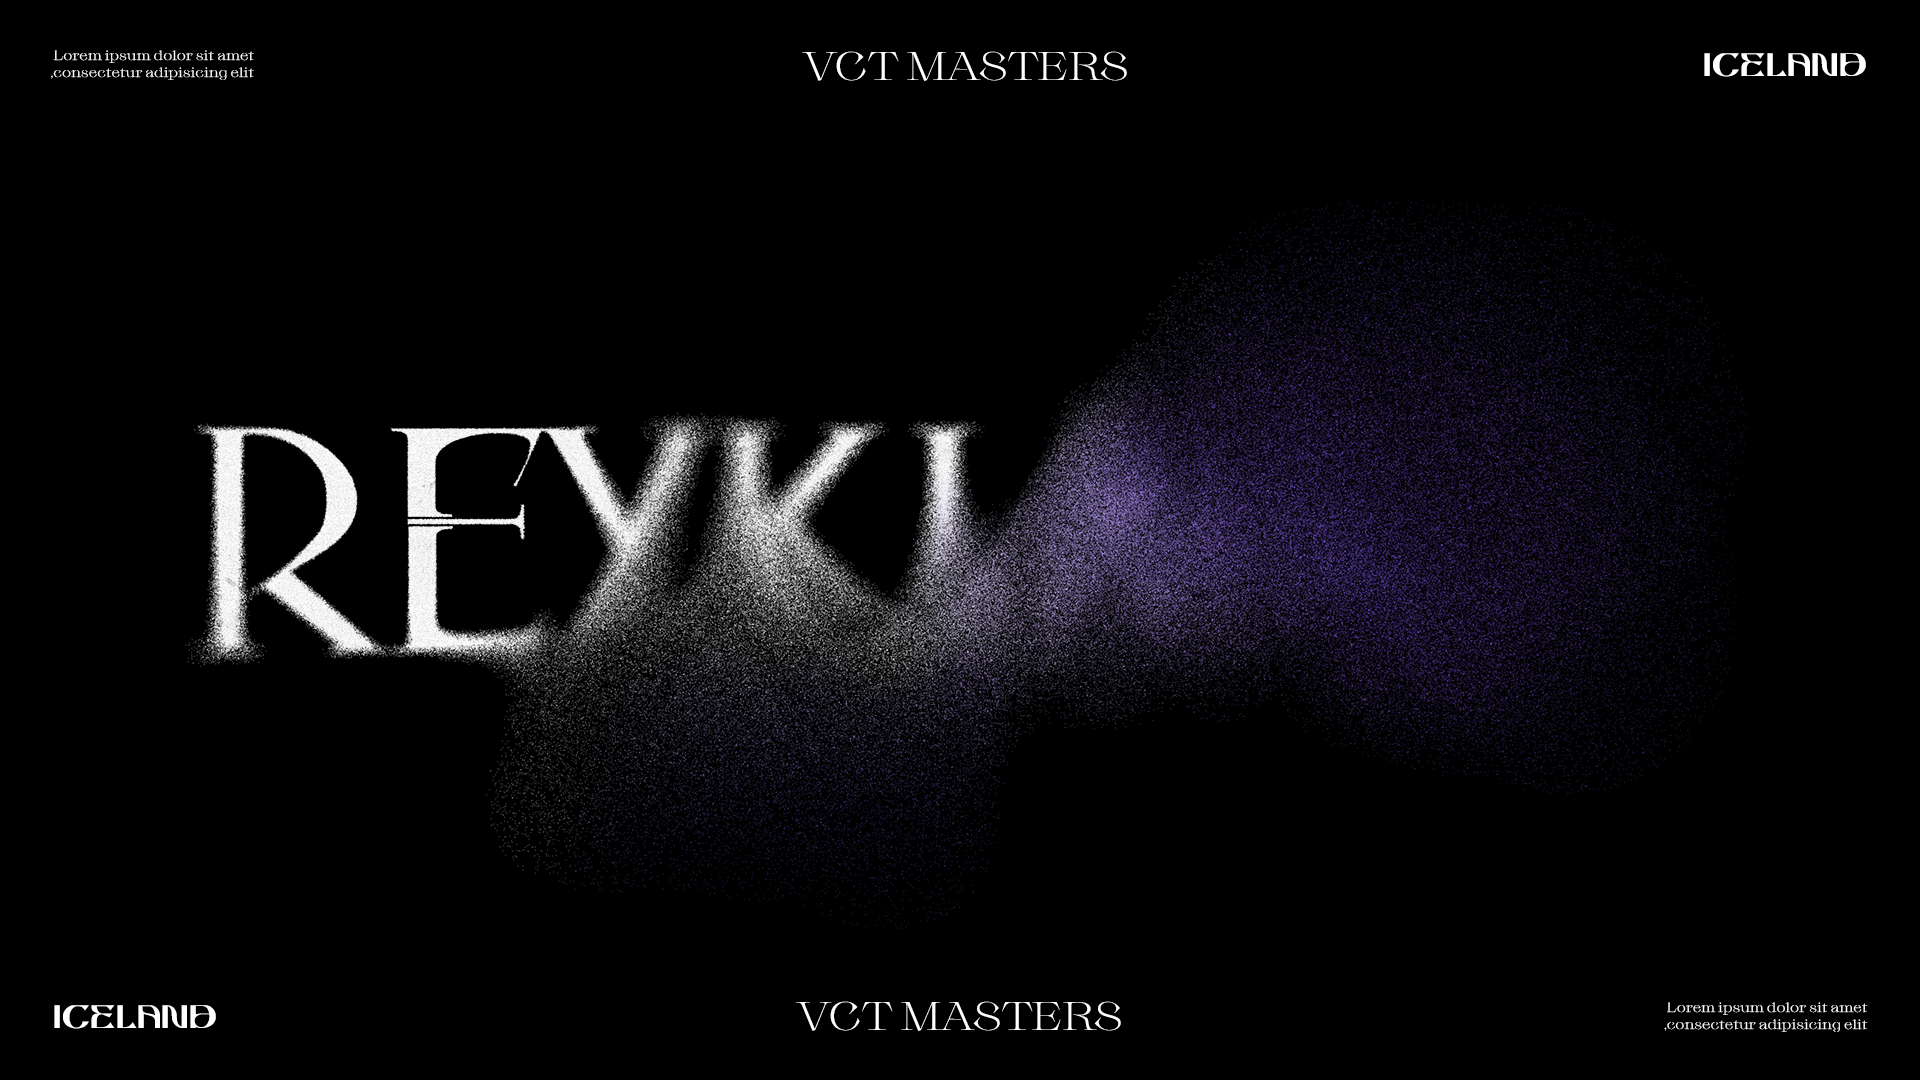 02 VCTMASTERS_REYKJAVIK C.png